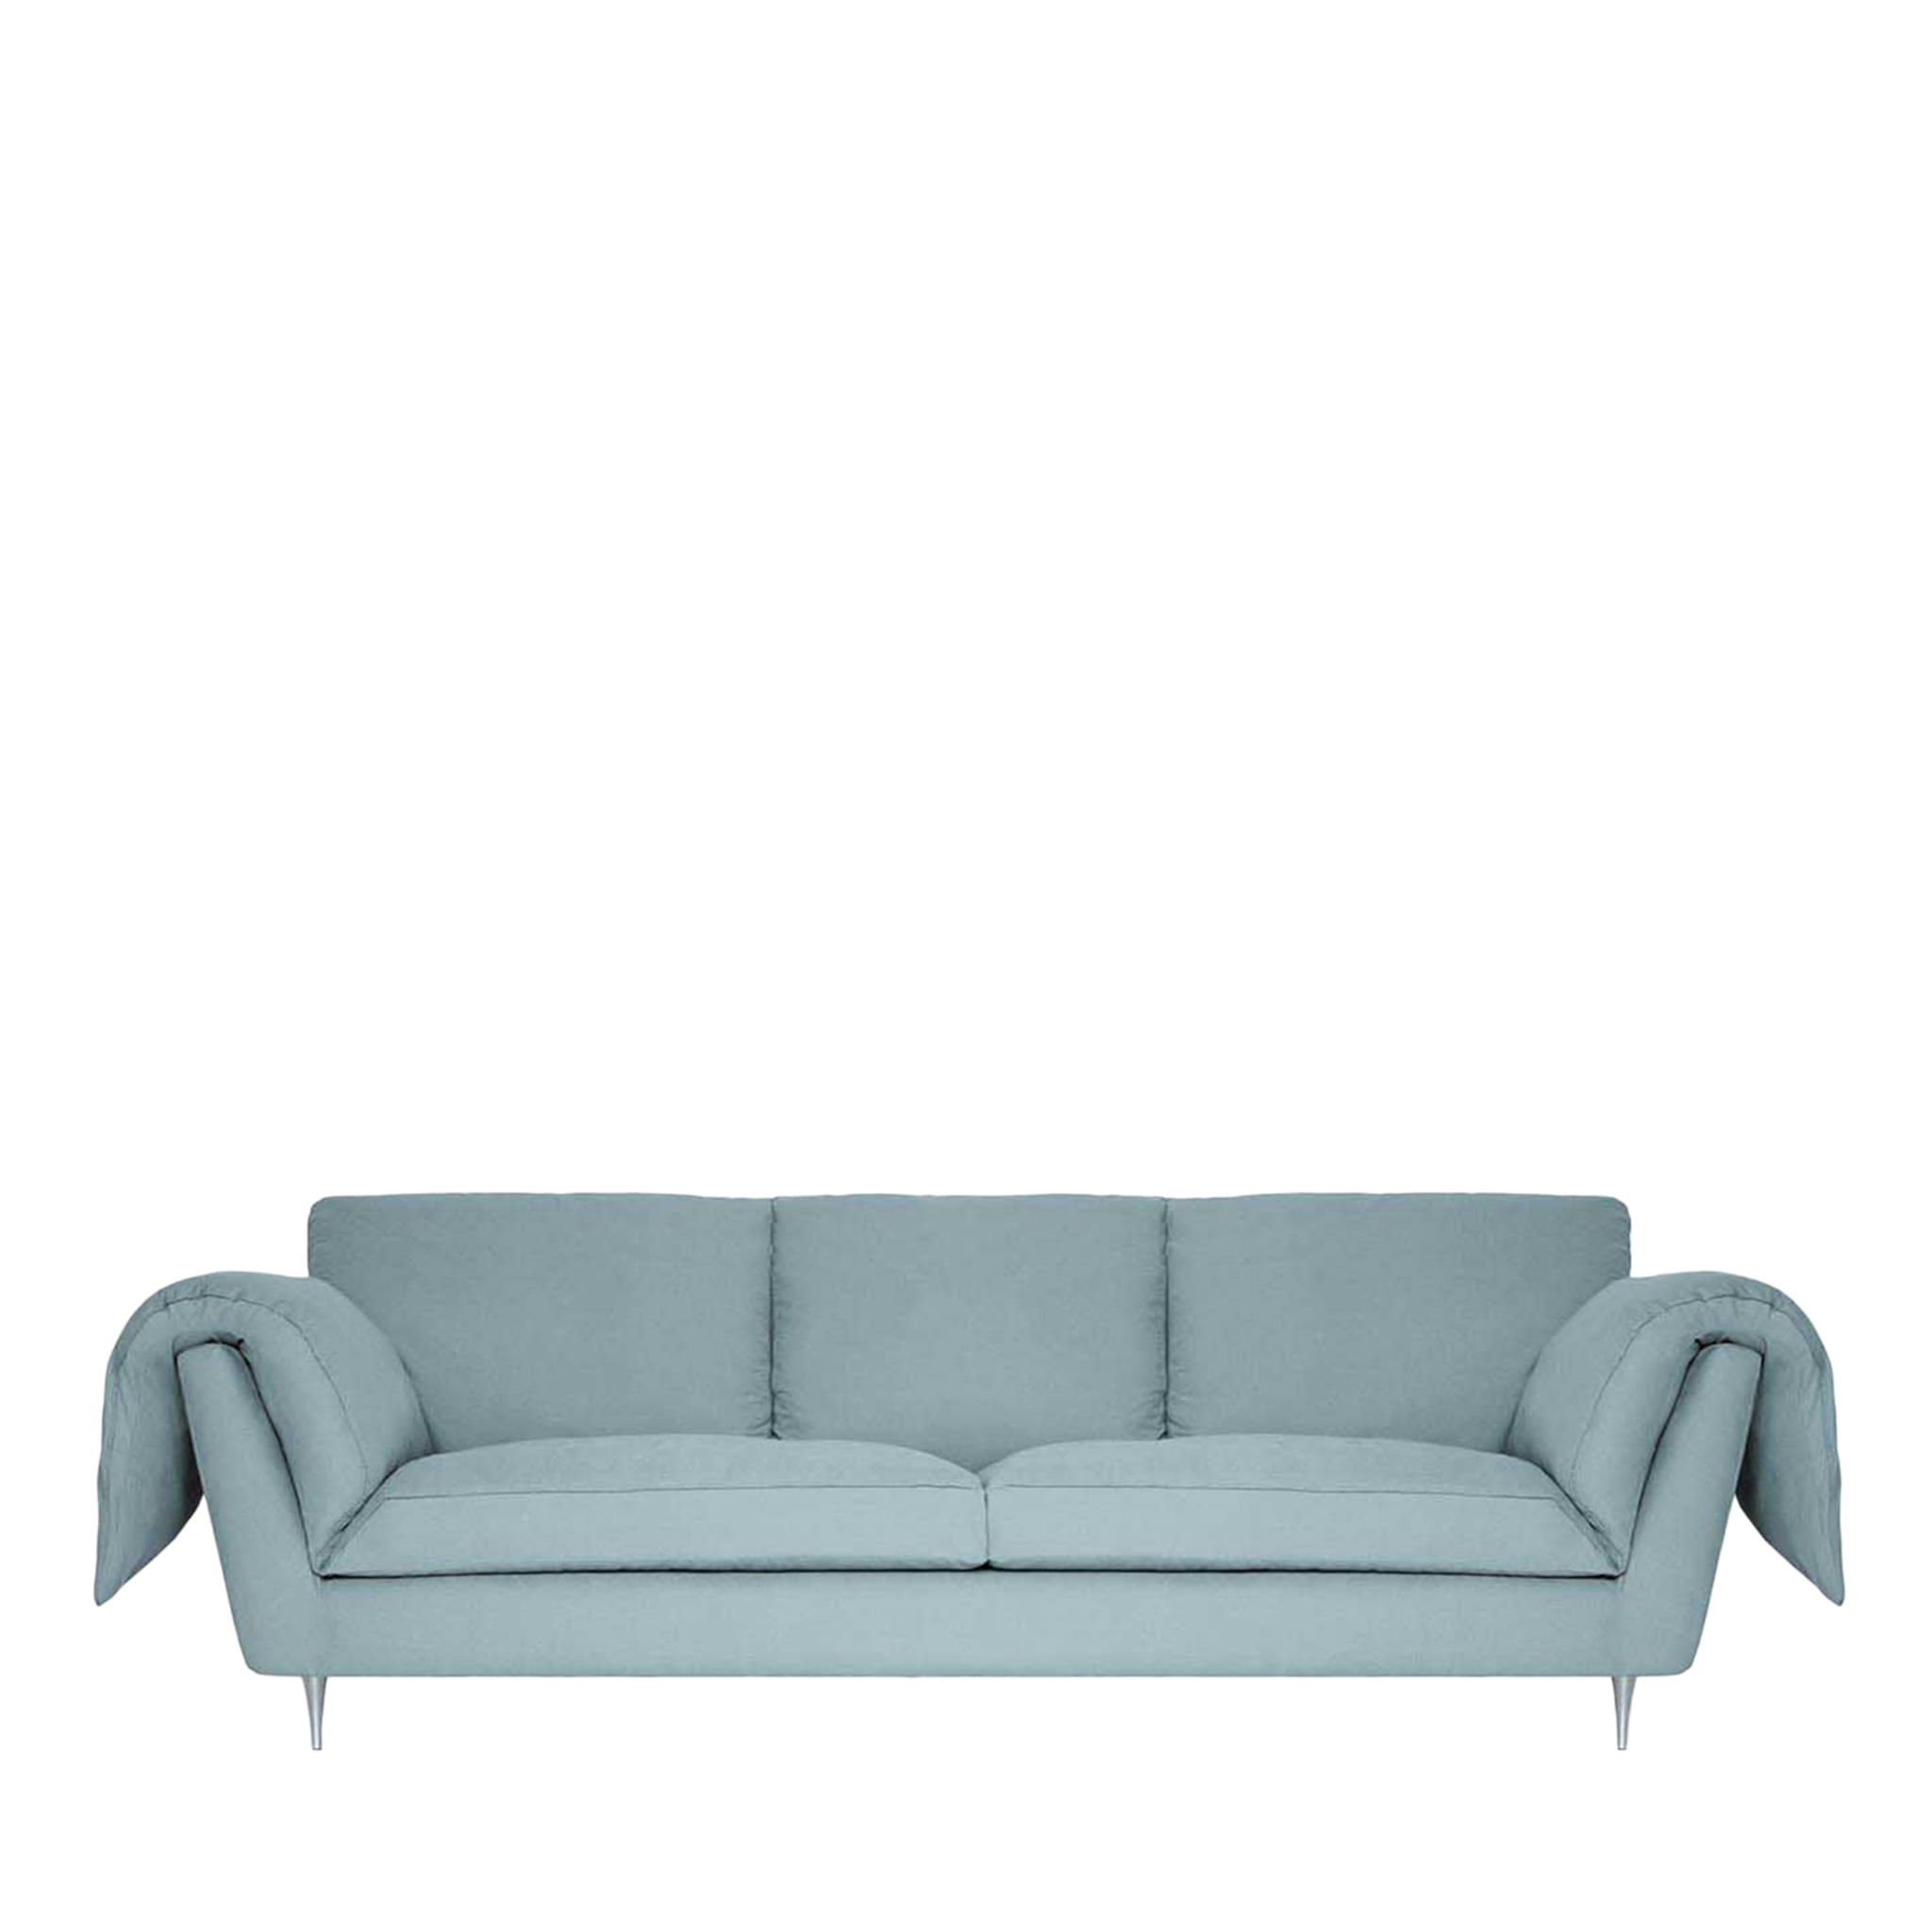 Casquet in Almond Green 3 Seater Bio Sofa - Main view